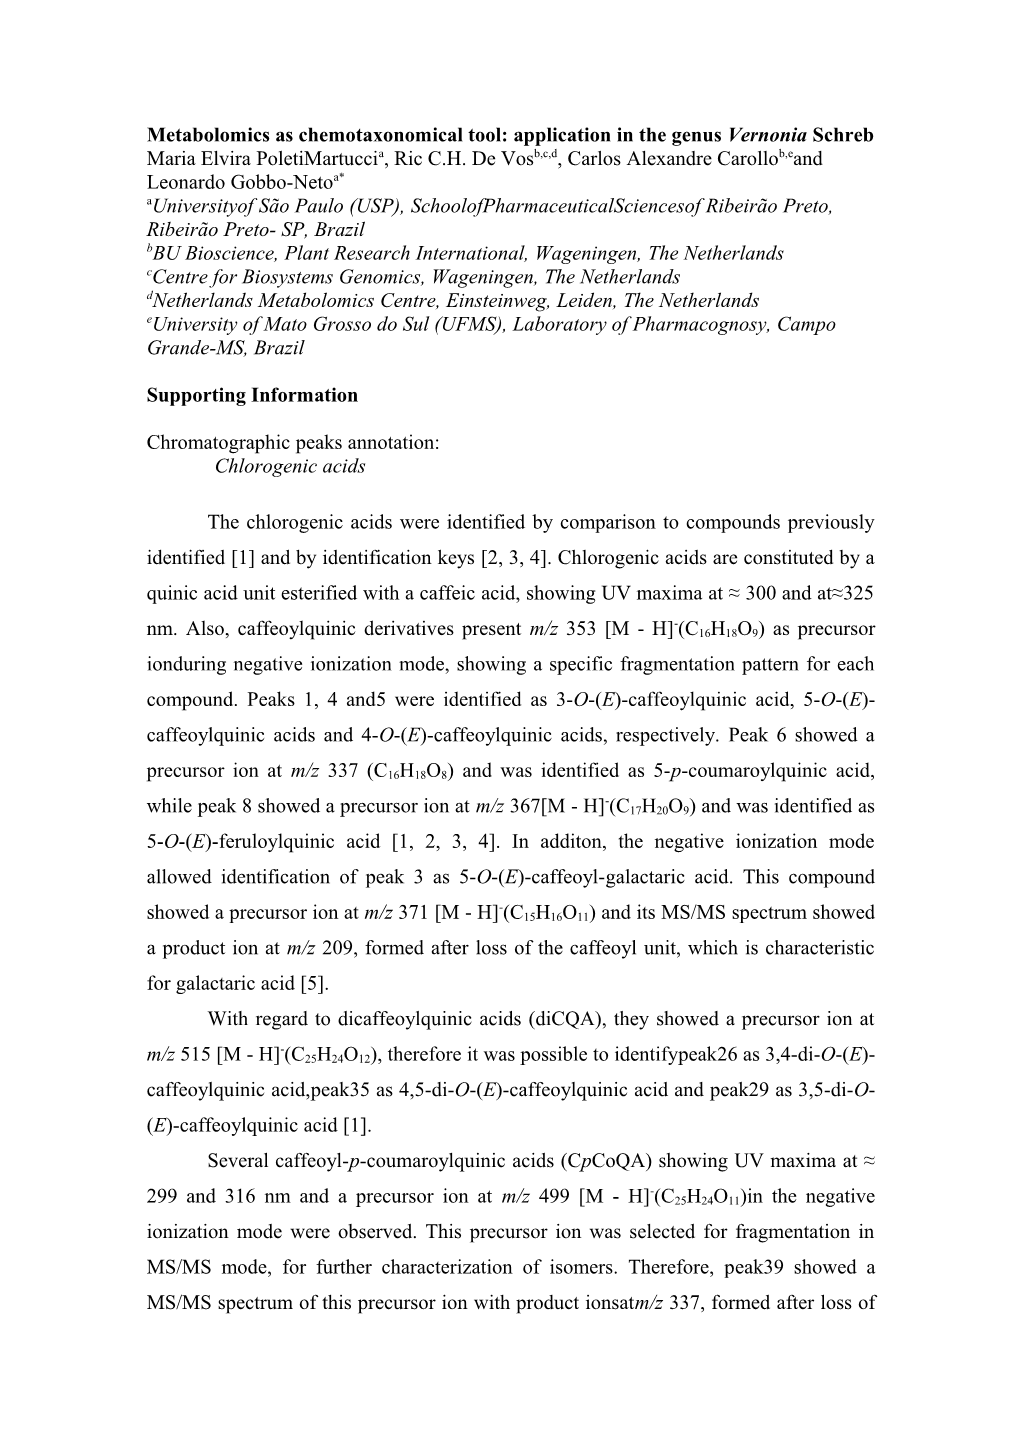 Metabolomics As Chemotaxonomical Tool: Application in the Genus Vernoniaschreb